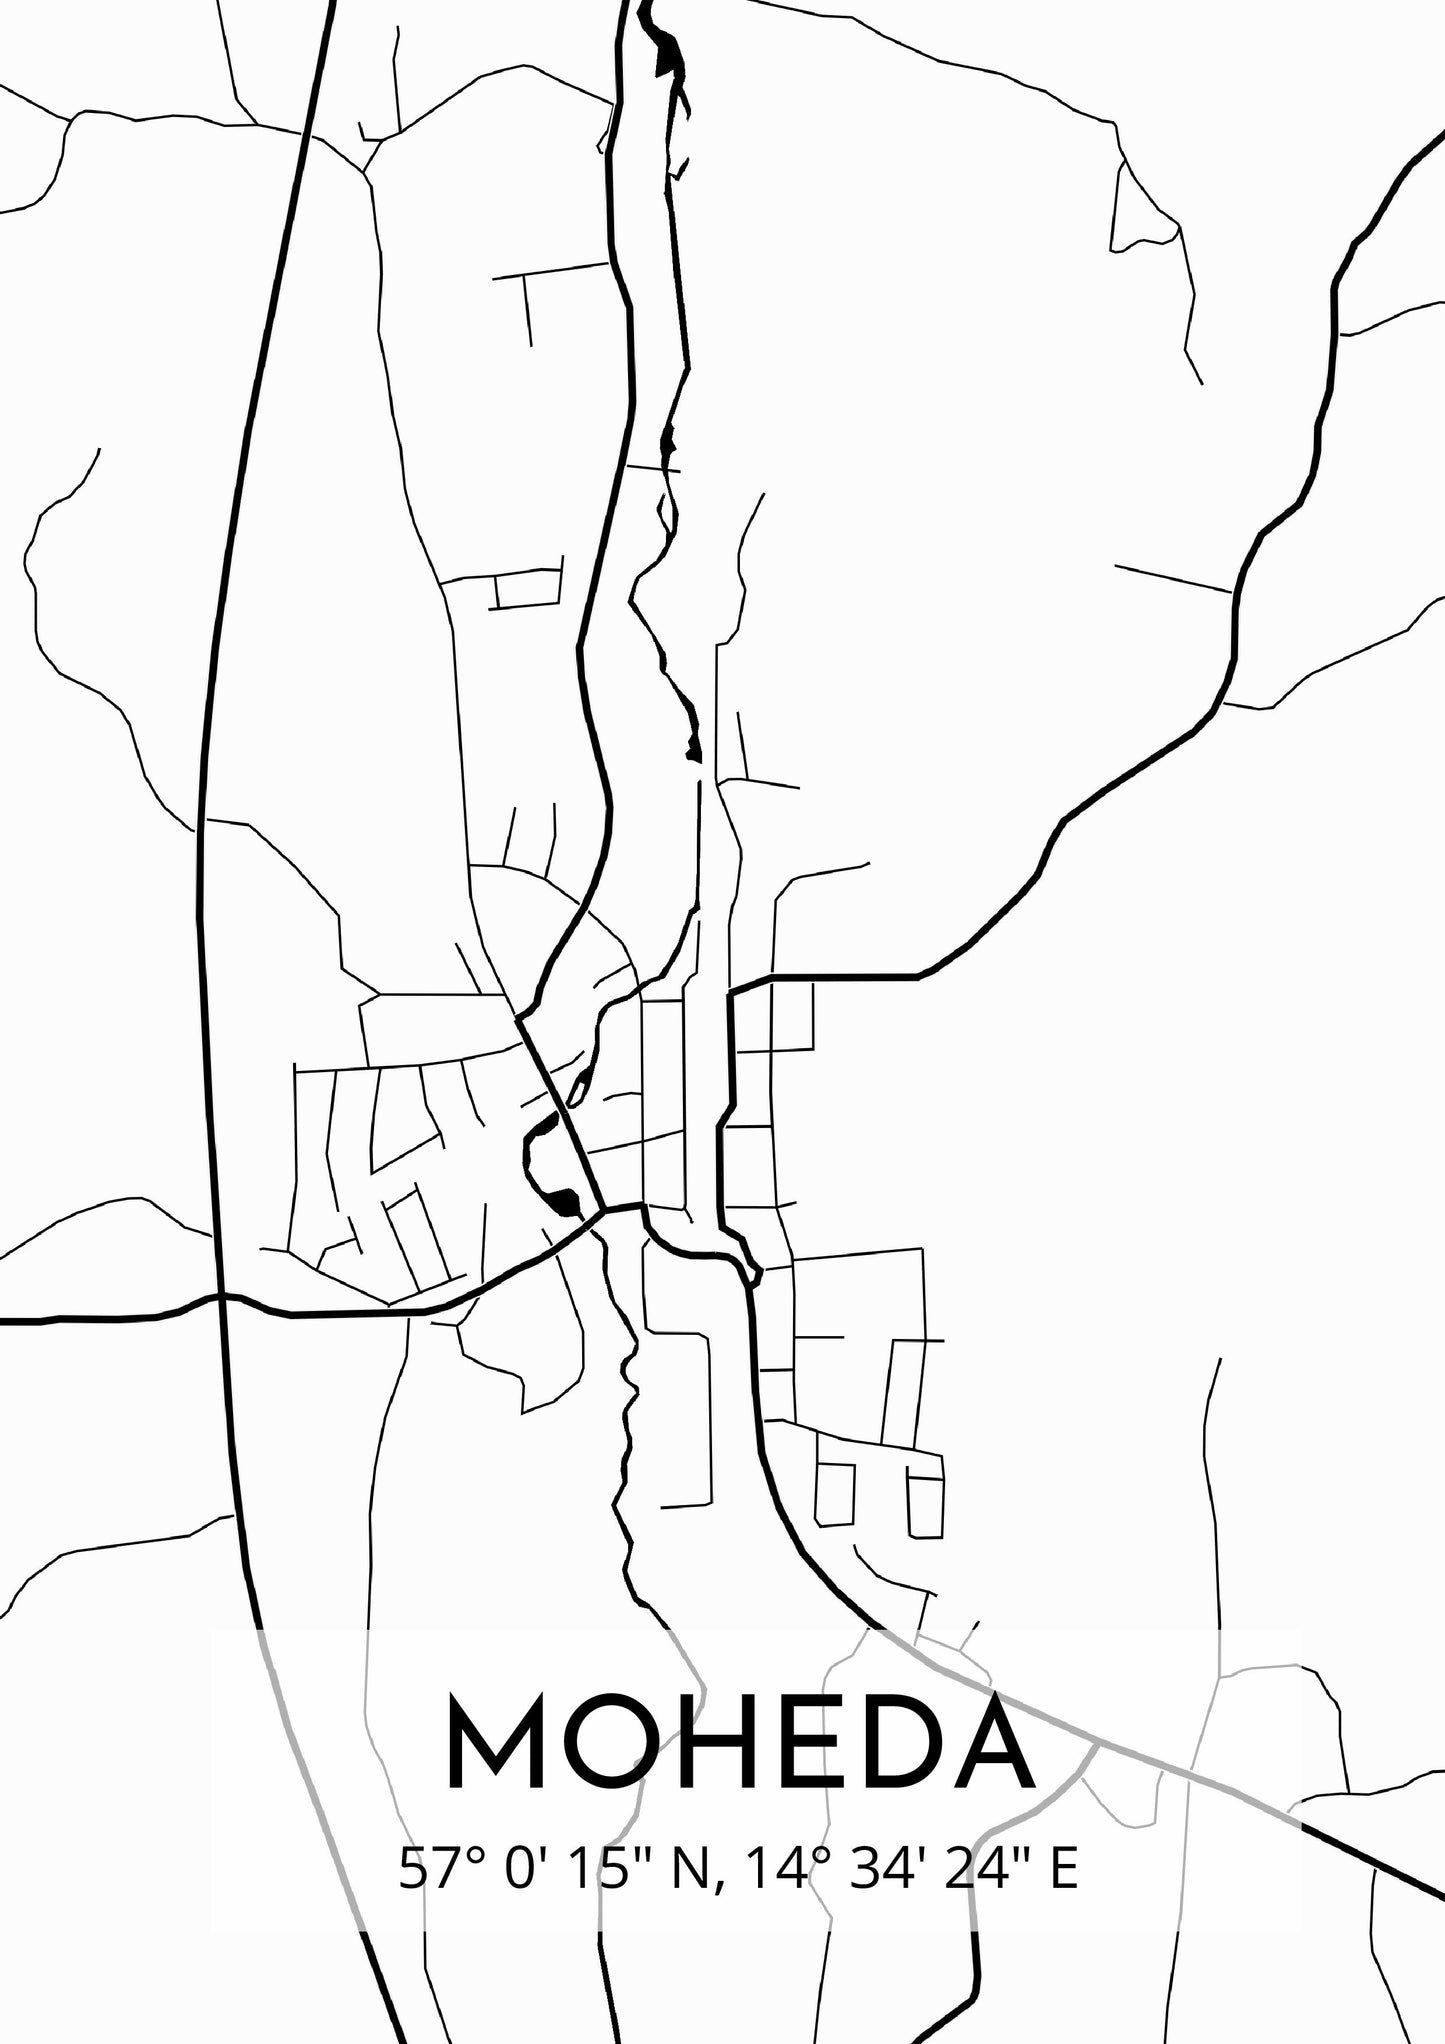 Moheda